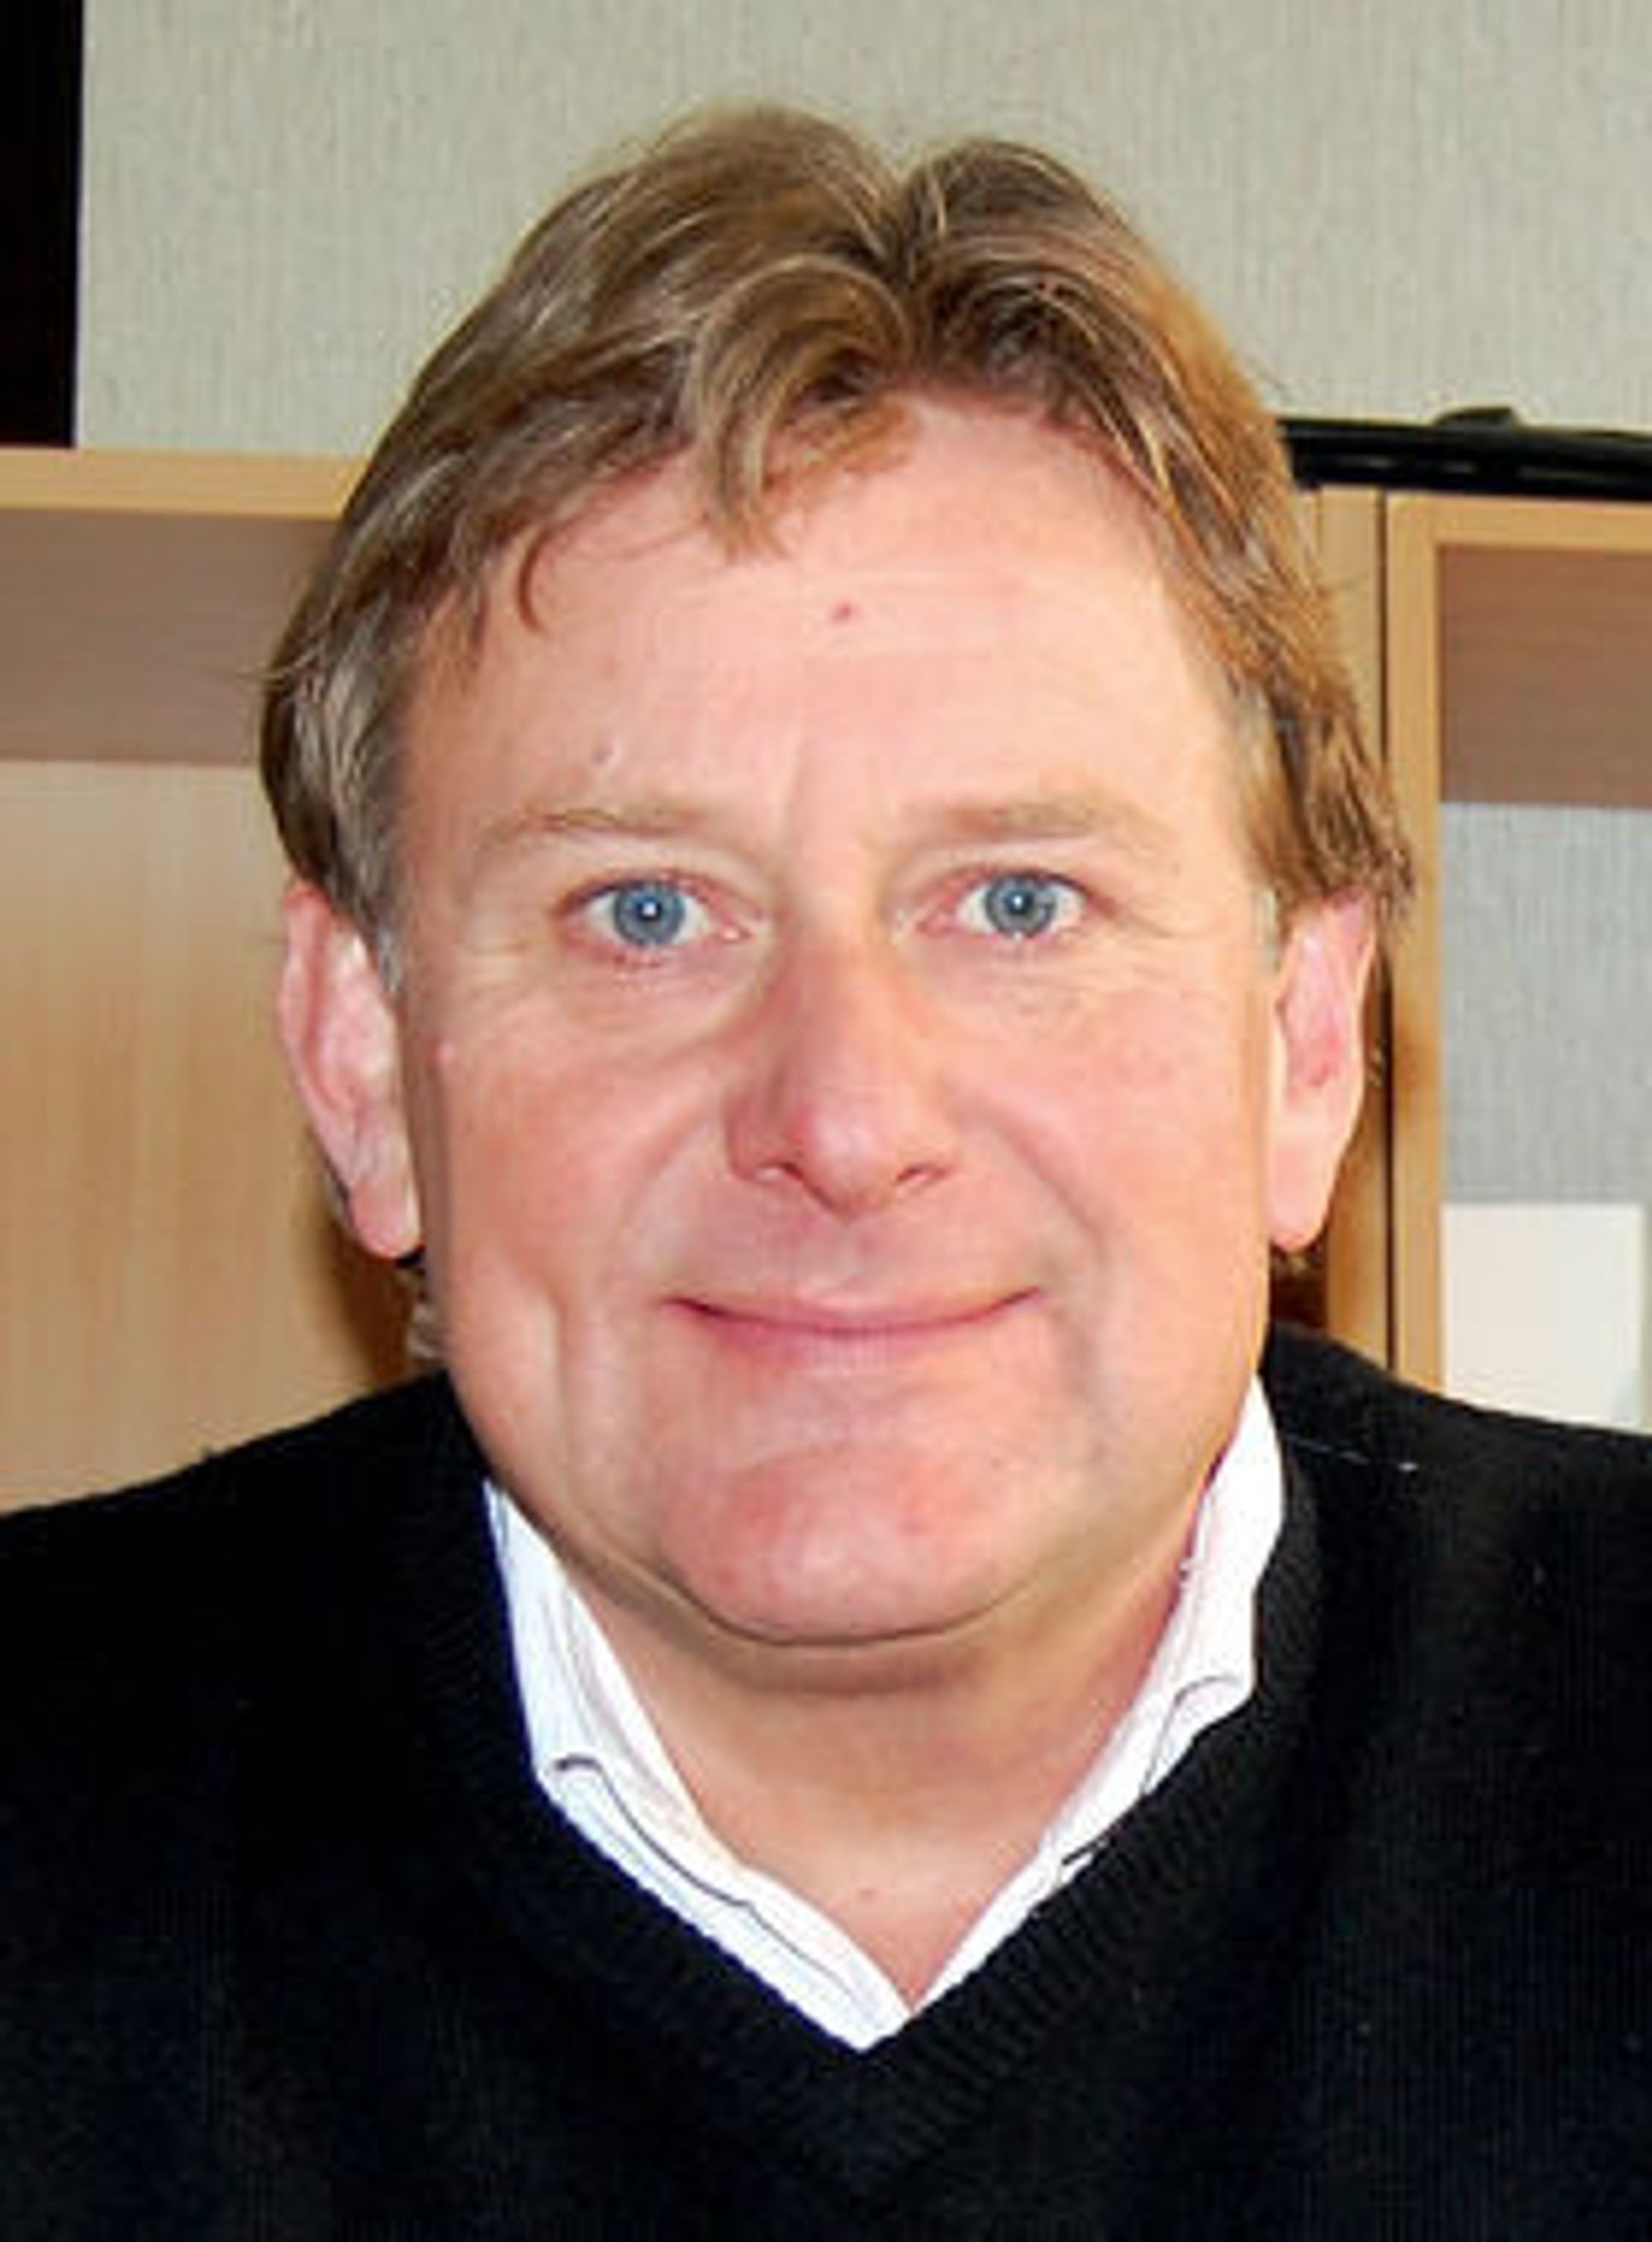 Administrerende direktør Morten Østberg mener NDS har et tilbud tilpasset offentlig sektor.